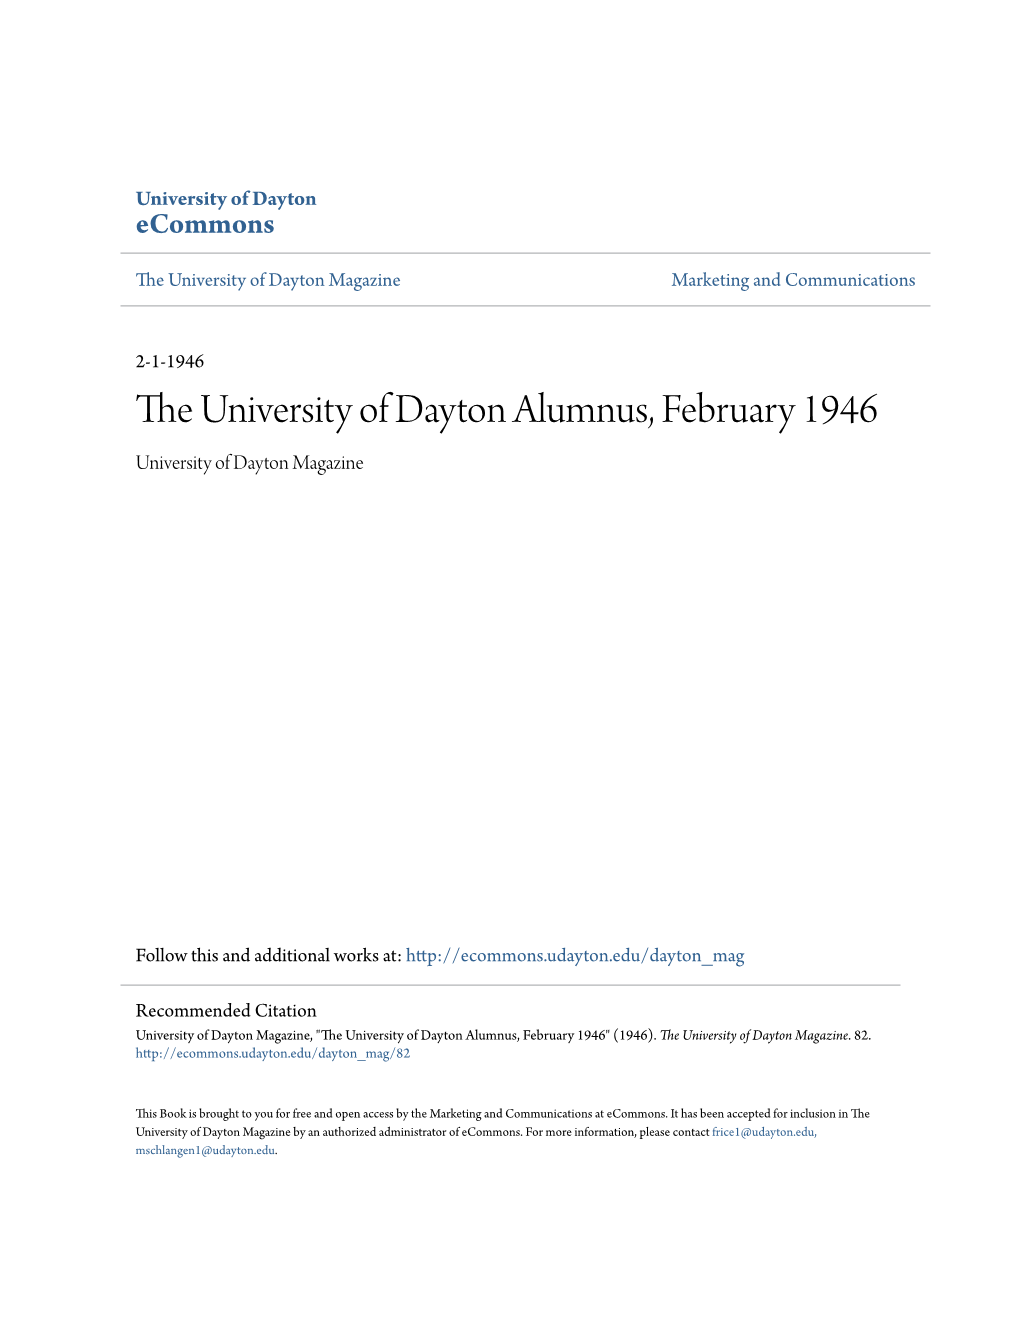 The University of Dayton Alumnus, February 1946